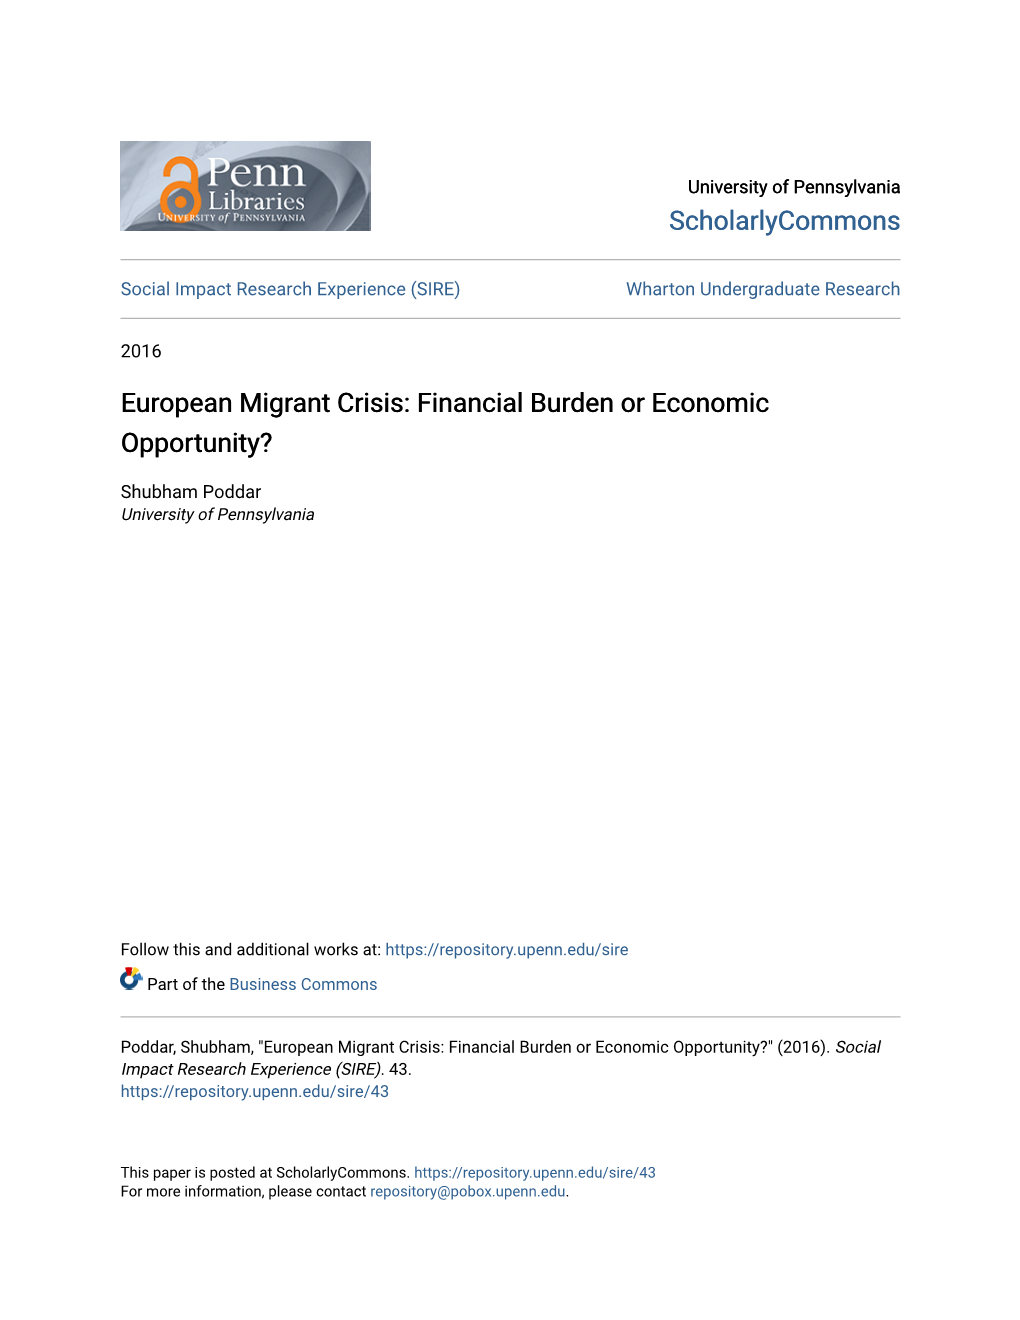 European Migrant Crisis: Financial Burden Or Economic Opportunity?